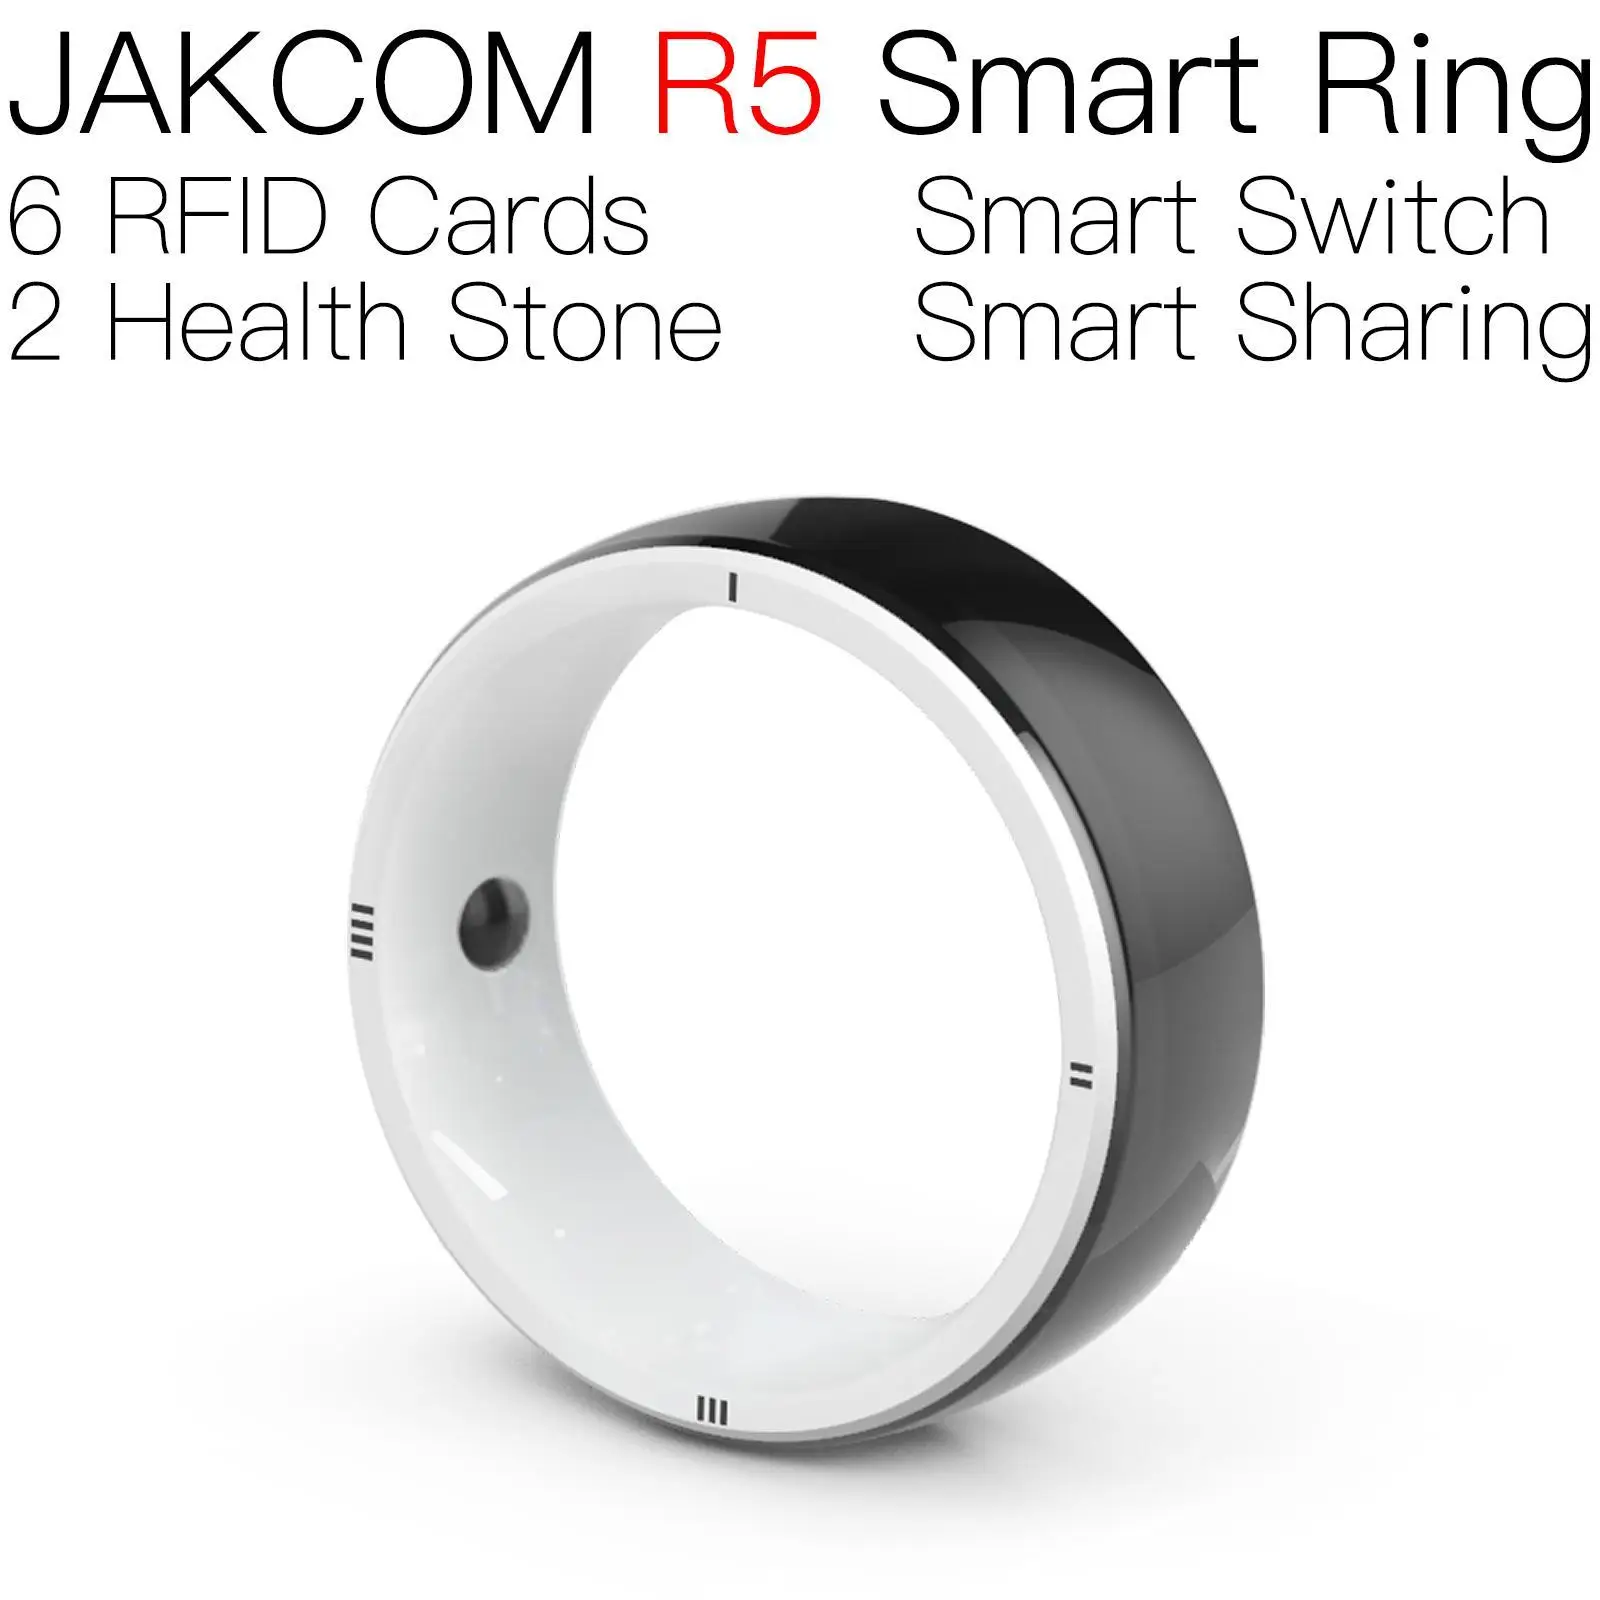 

JAKCOM R5 Smart Ring Newer than sd card targetas del grocery supermarket nfc tag nail original grew jordan 4 nano rfid magic